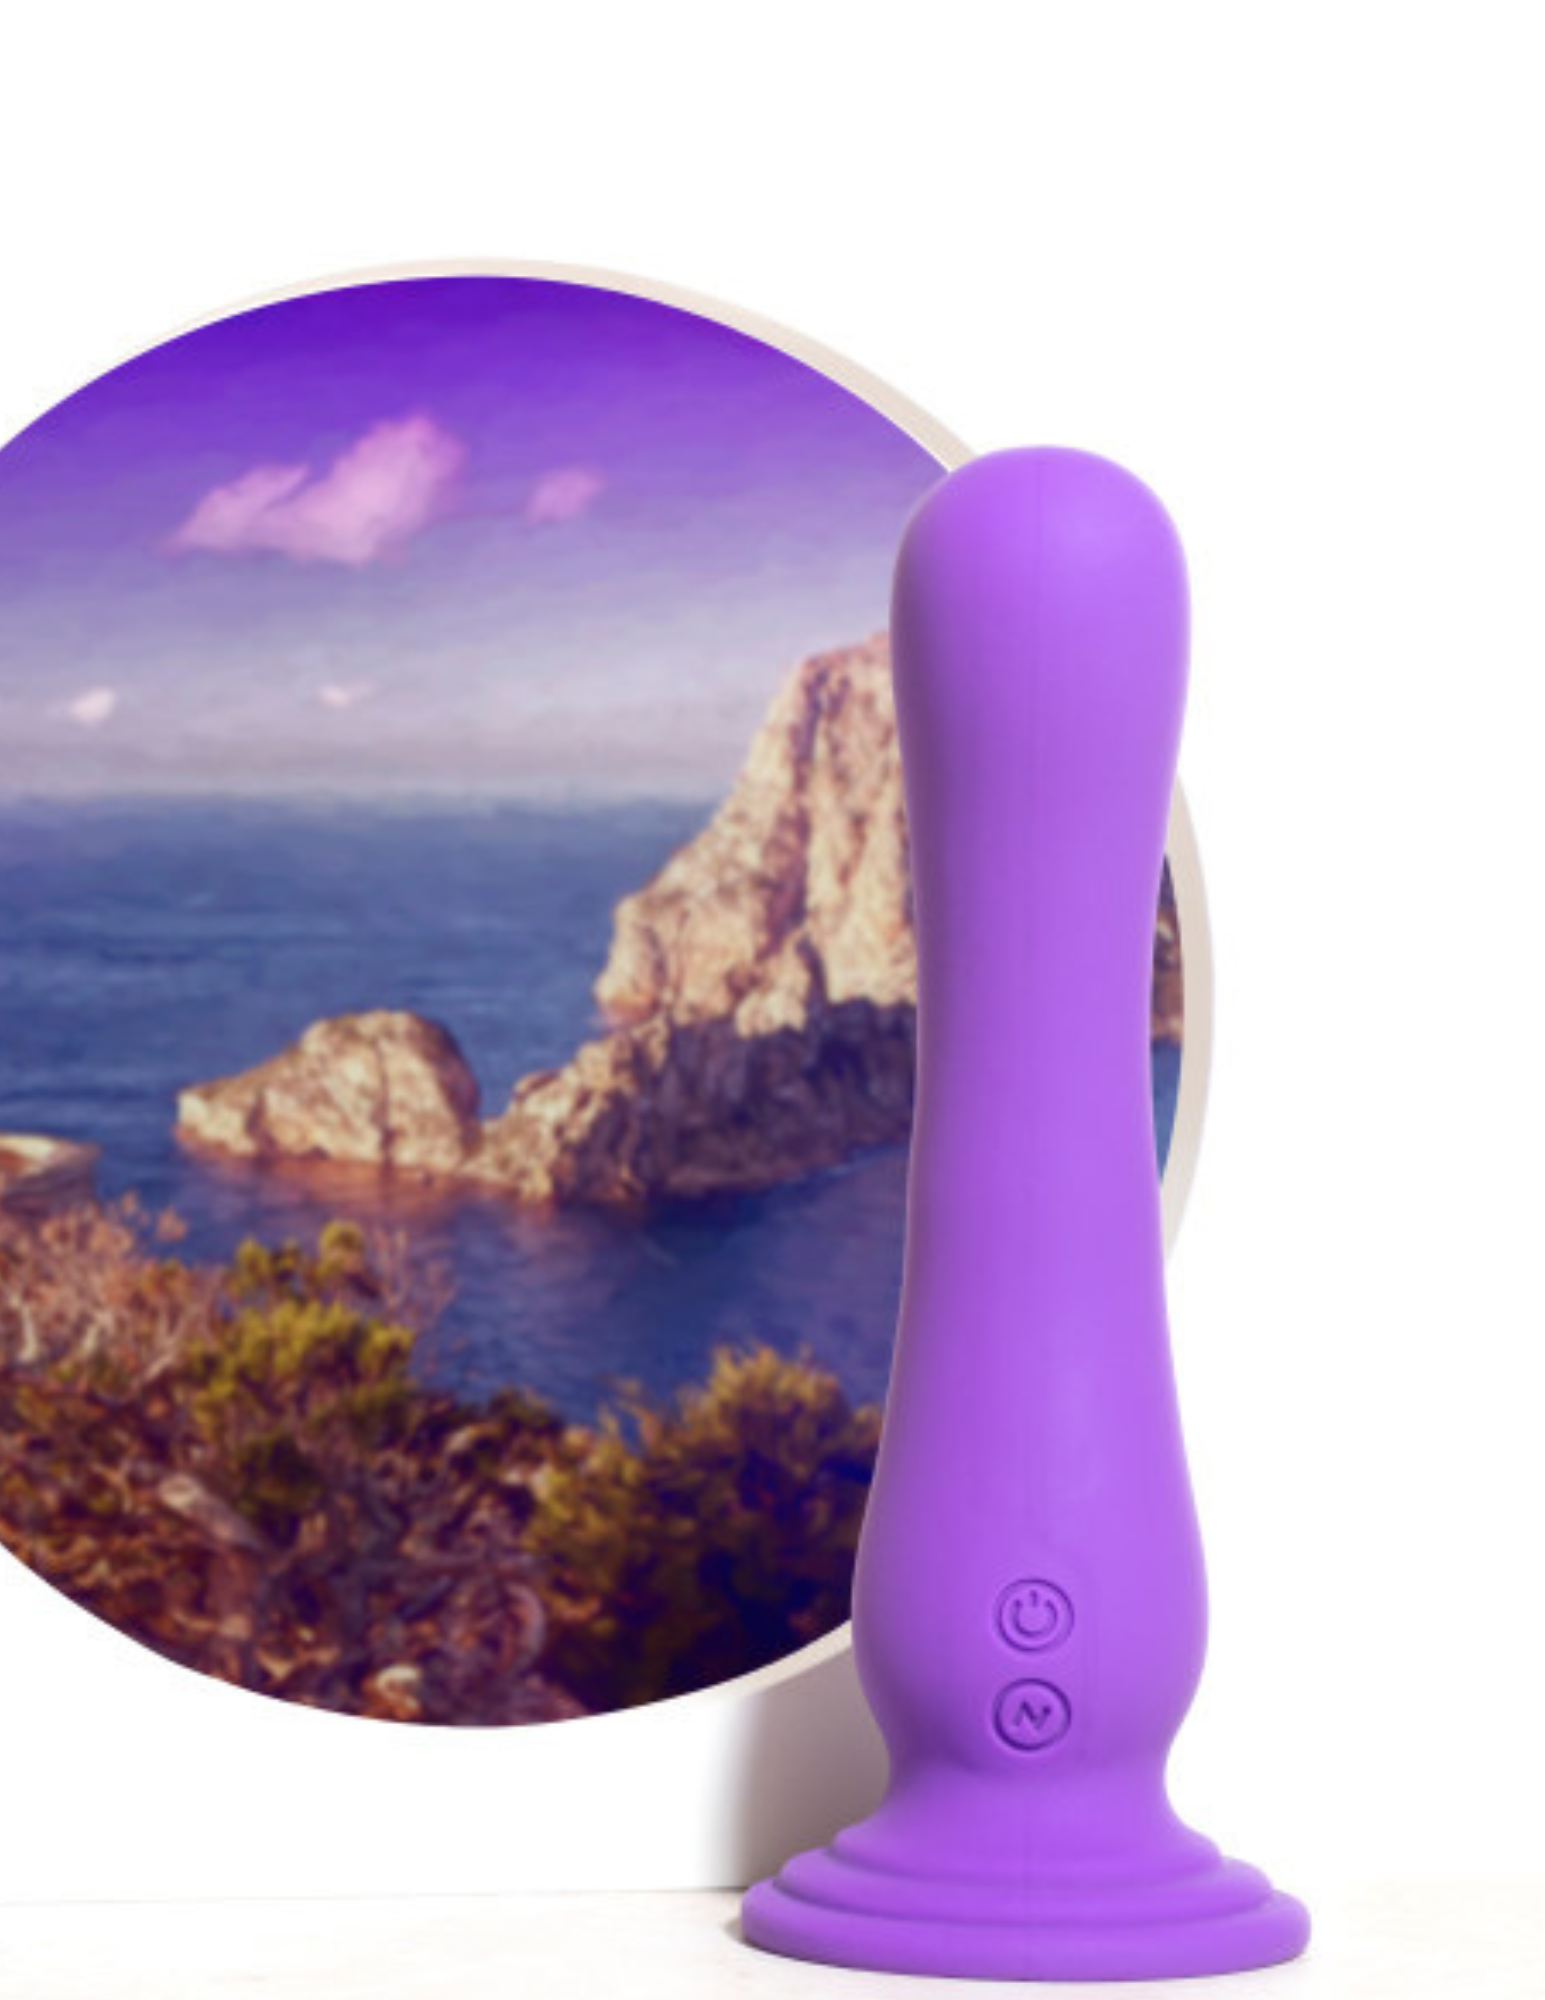 Ad for the Impressions Ibiza Vibrator from Blush (purple).